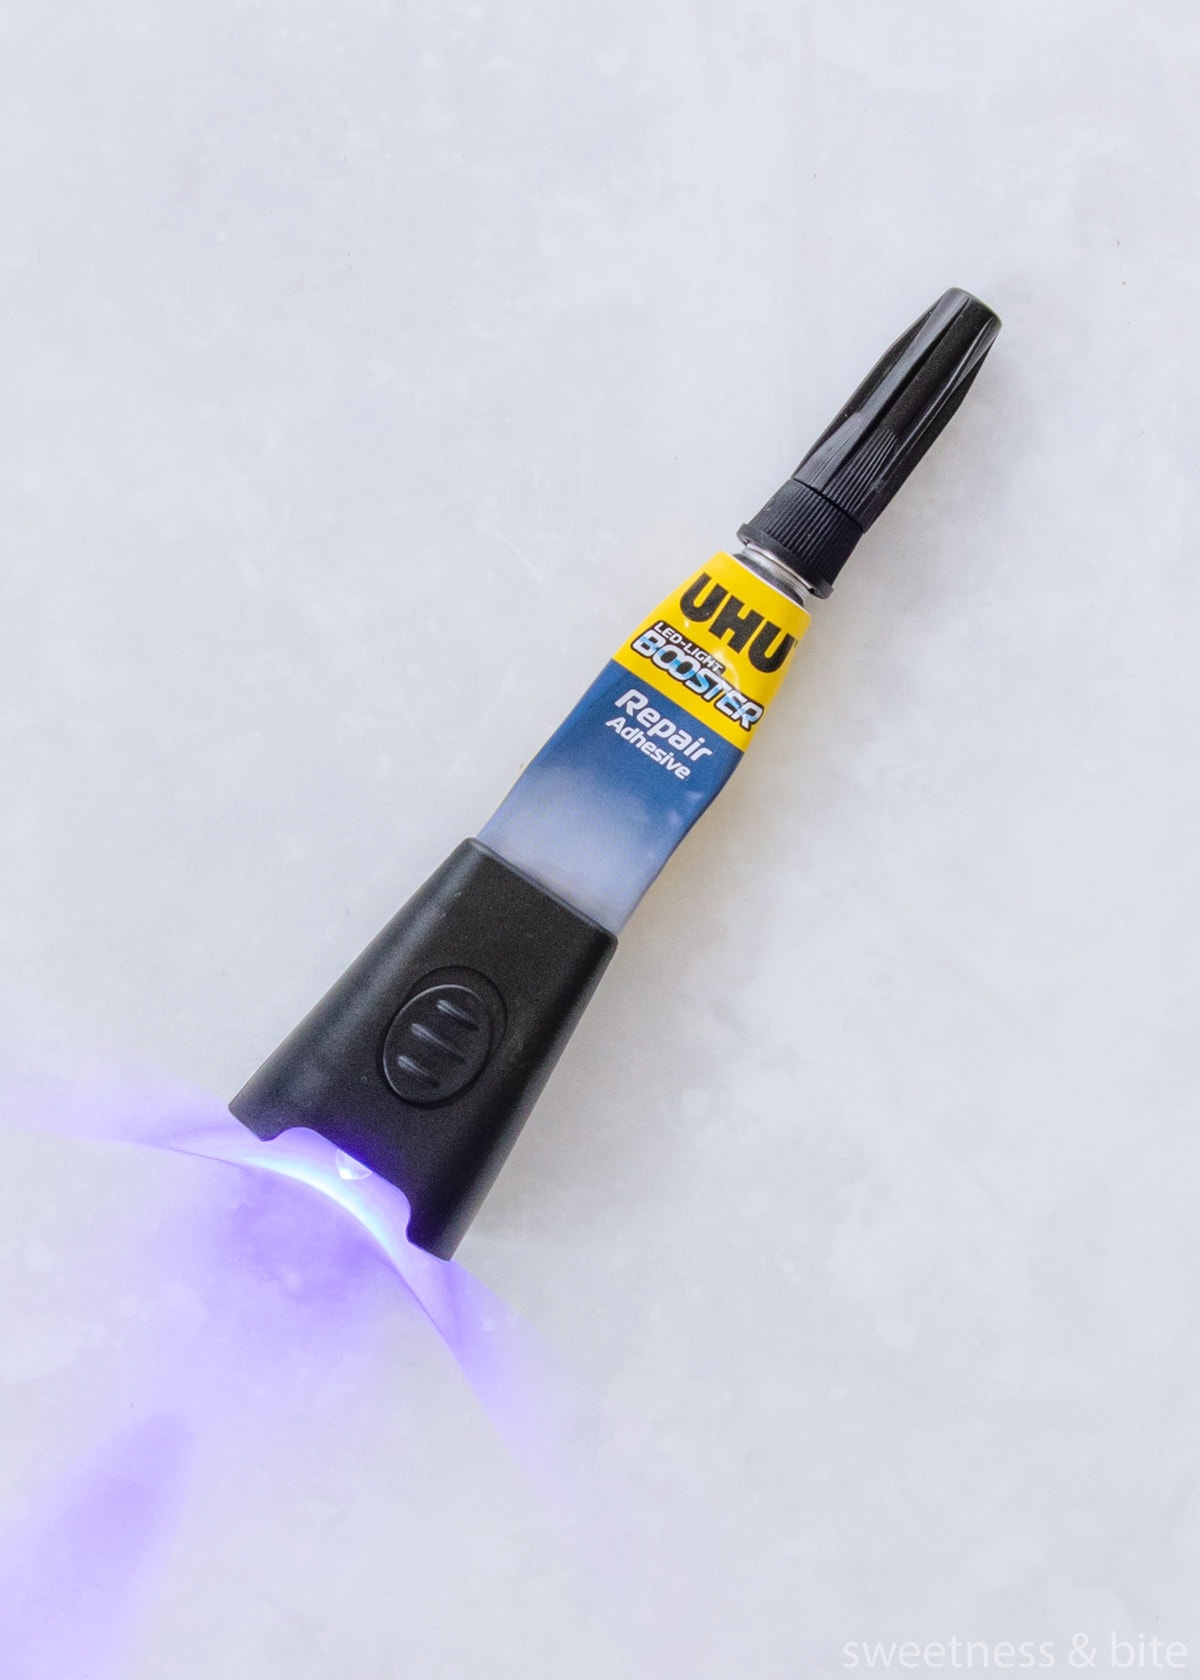 A tube of Uhu blue light glue.